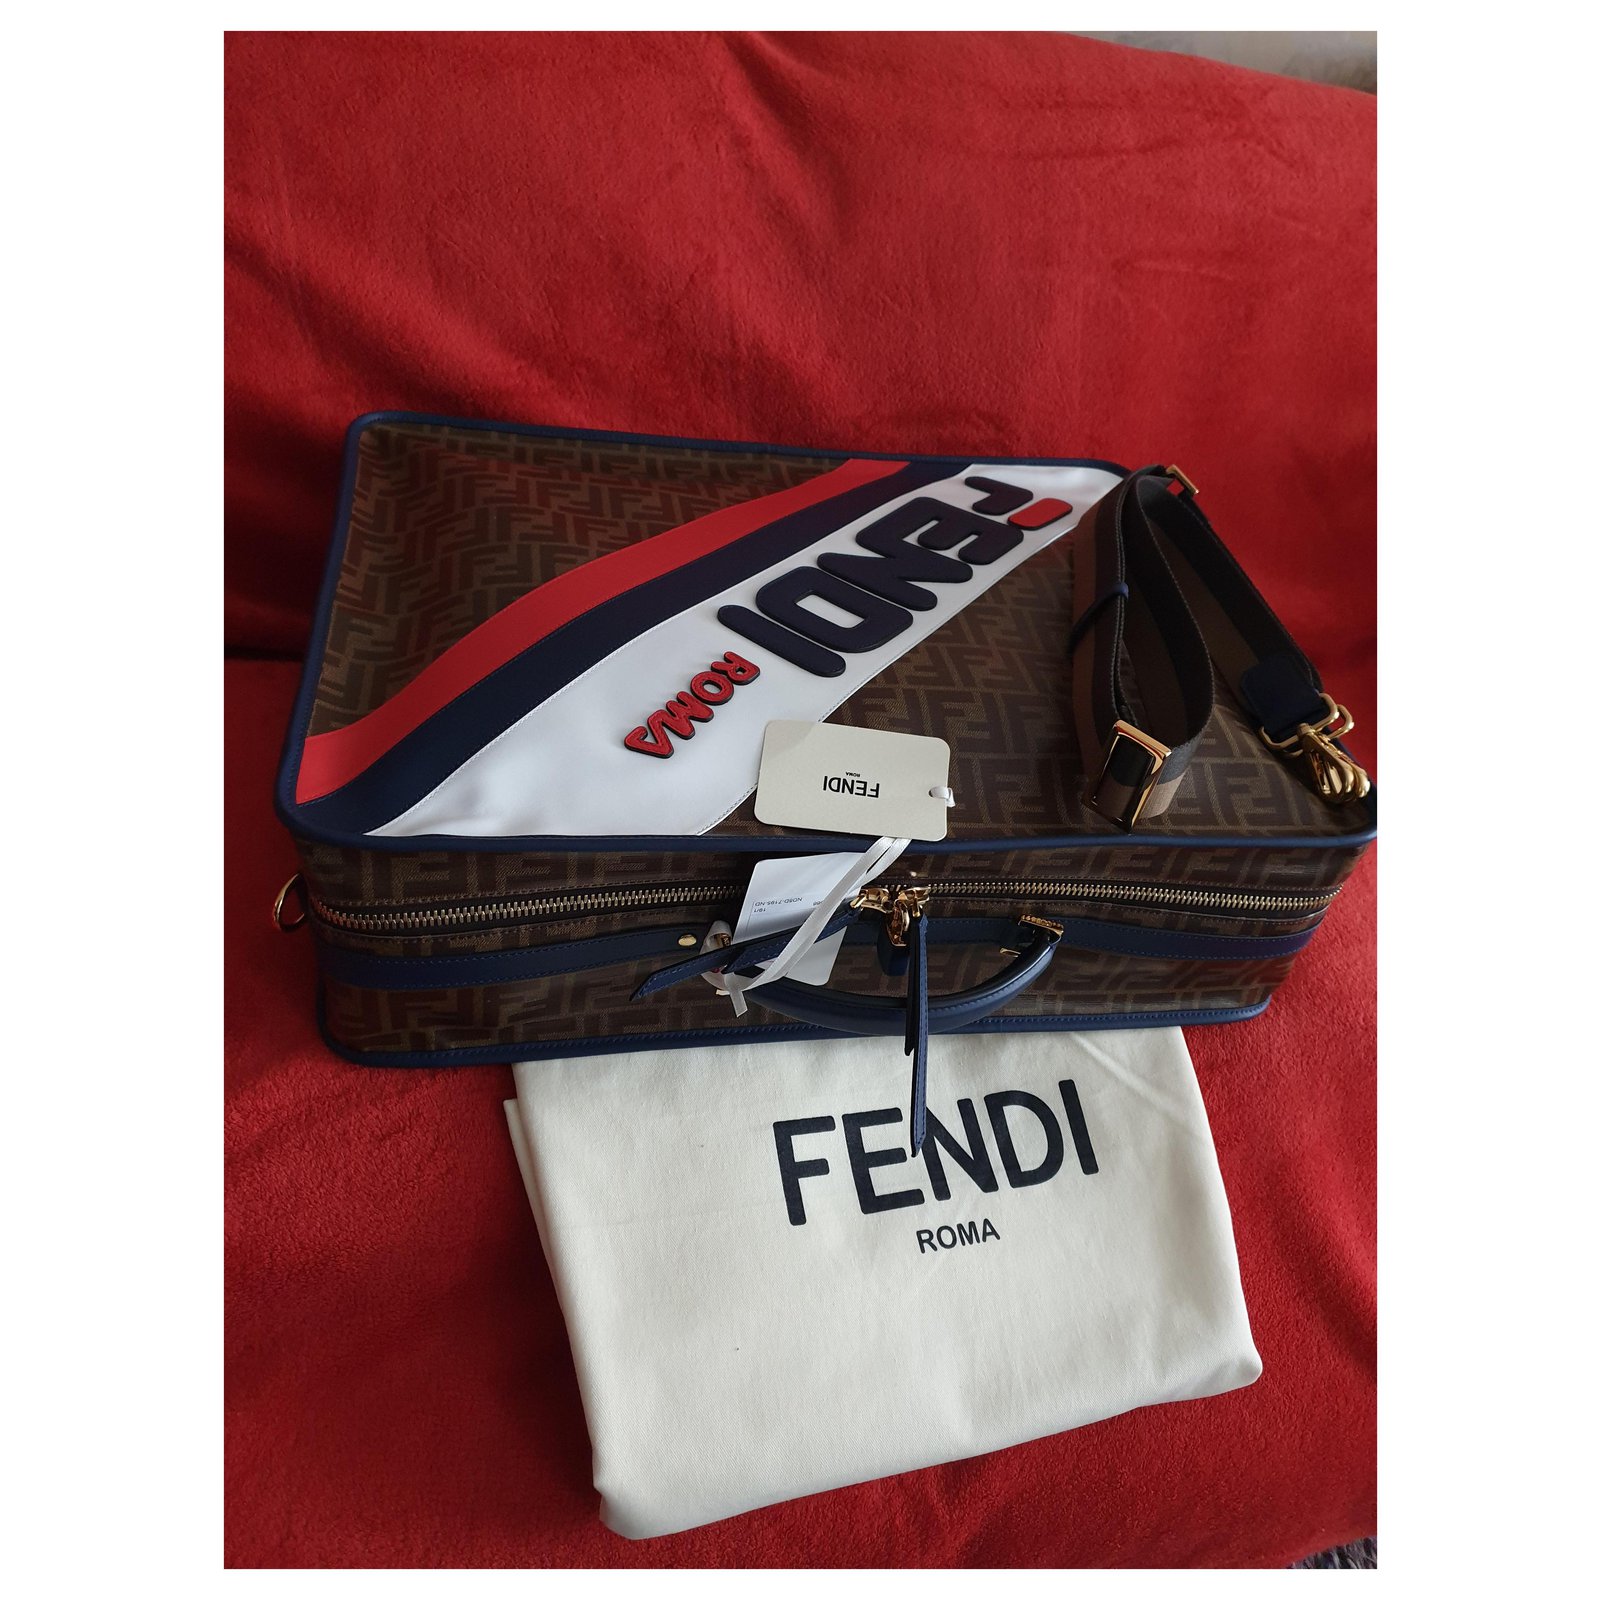 FENDI MANIA logo printed travel bag - Coated canvas - Brand new